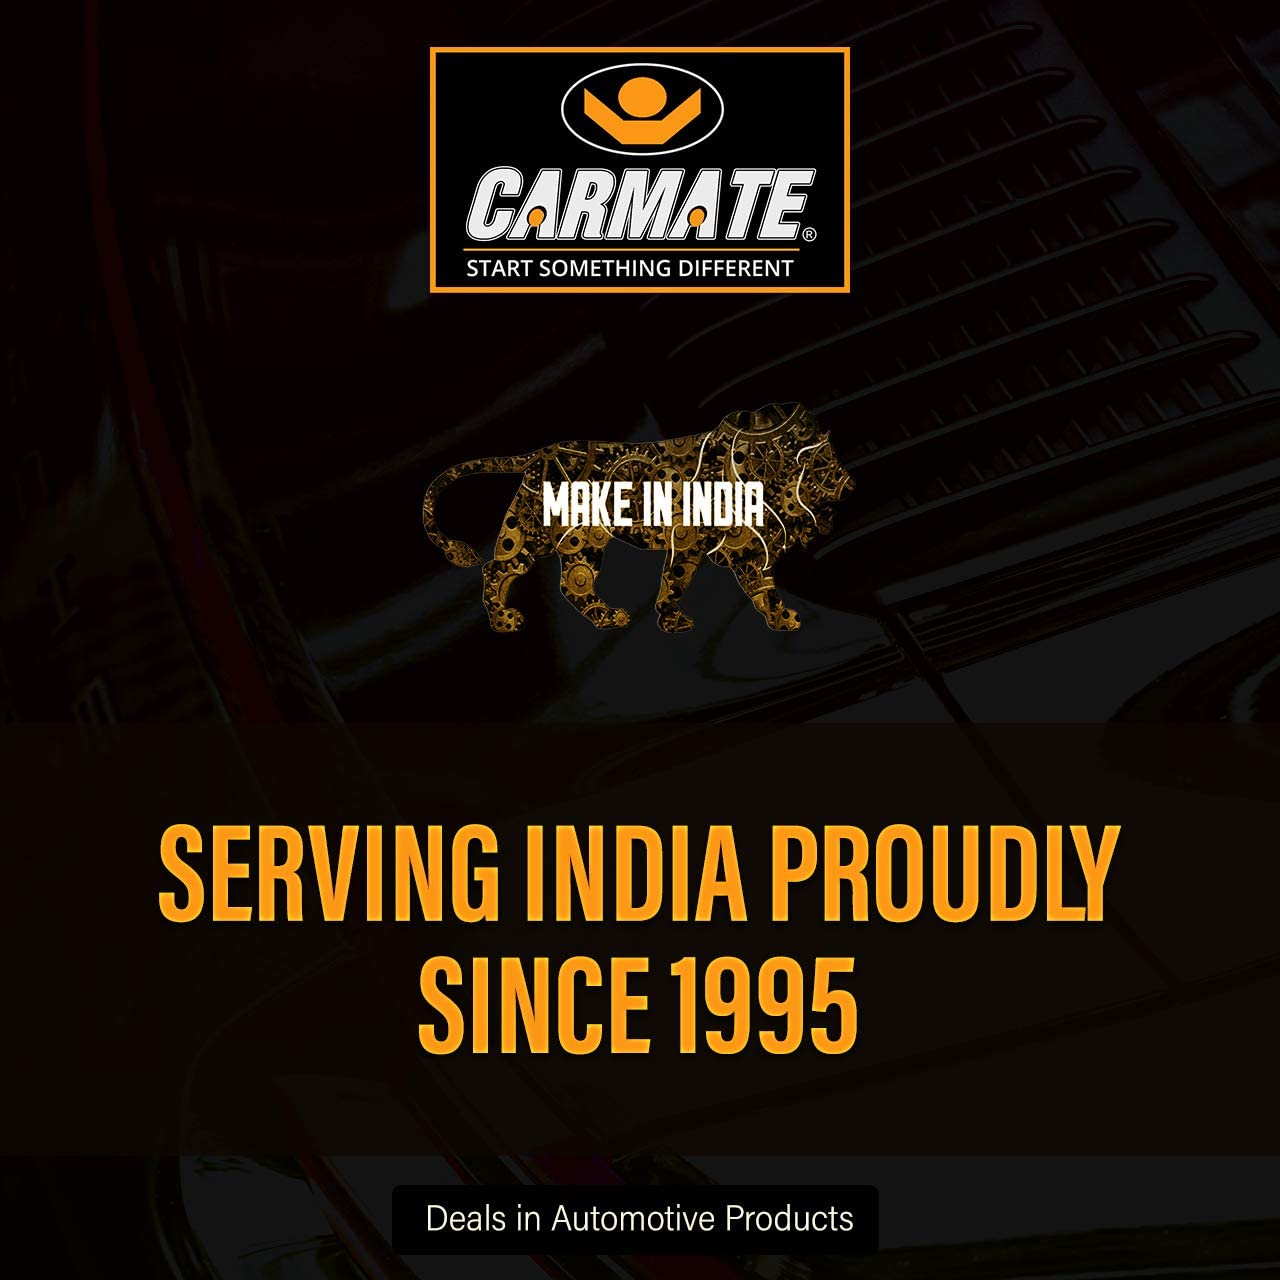 Carmate ECO Car Body Cover (Grey) for Tata - Zest - CARMATE®